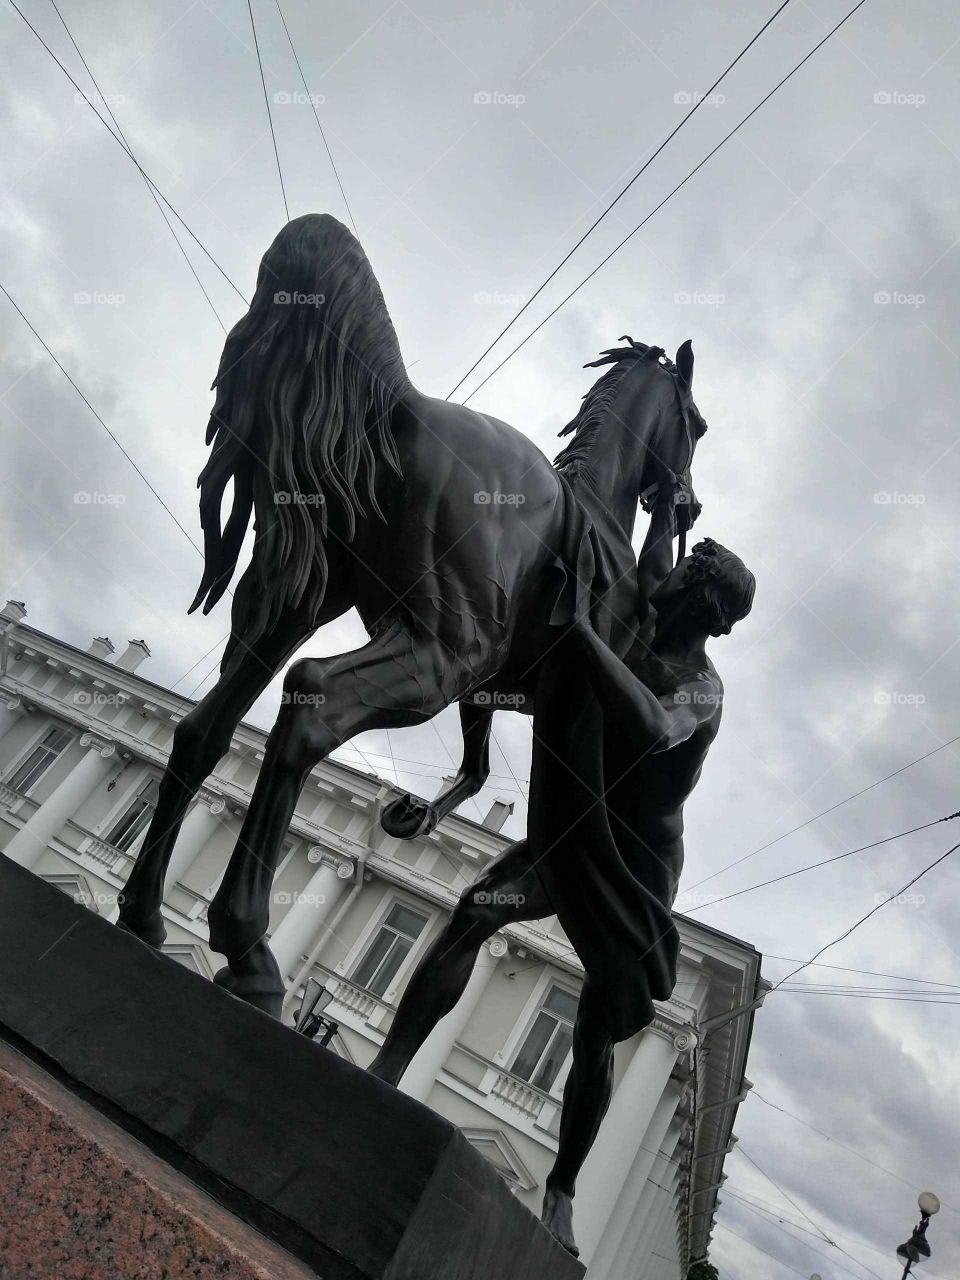 Statue Horse and man Saint Petesburg Russia